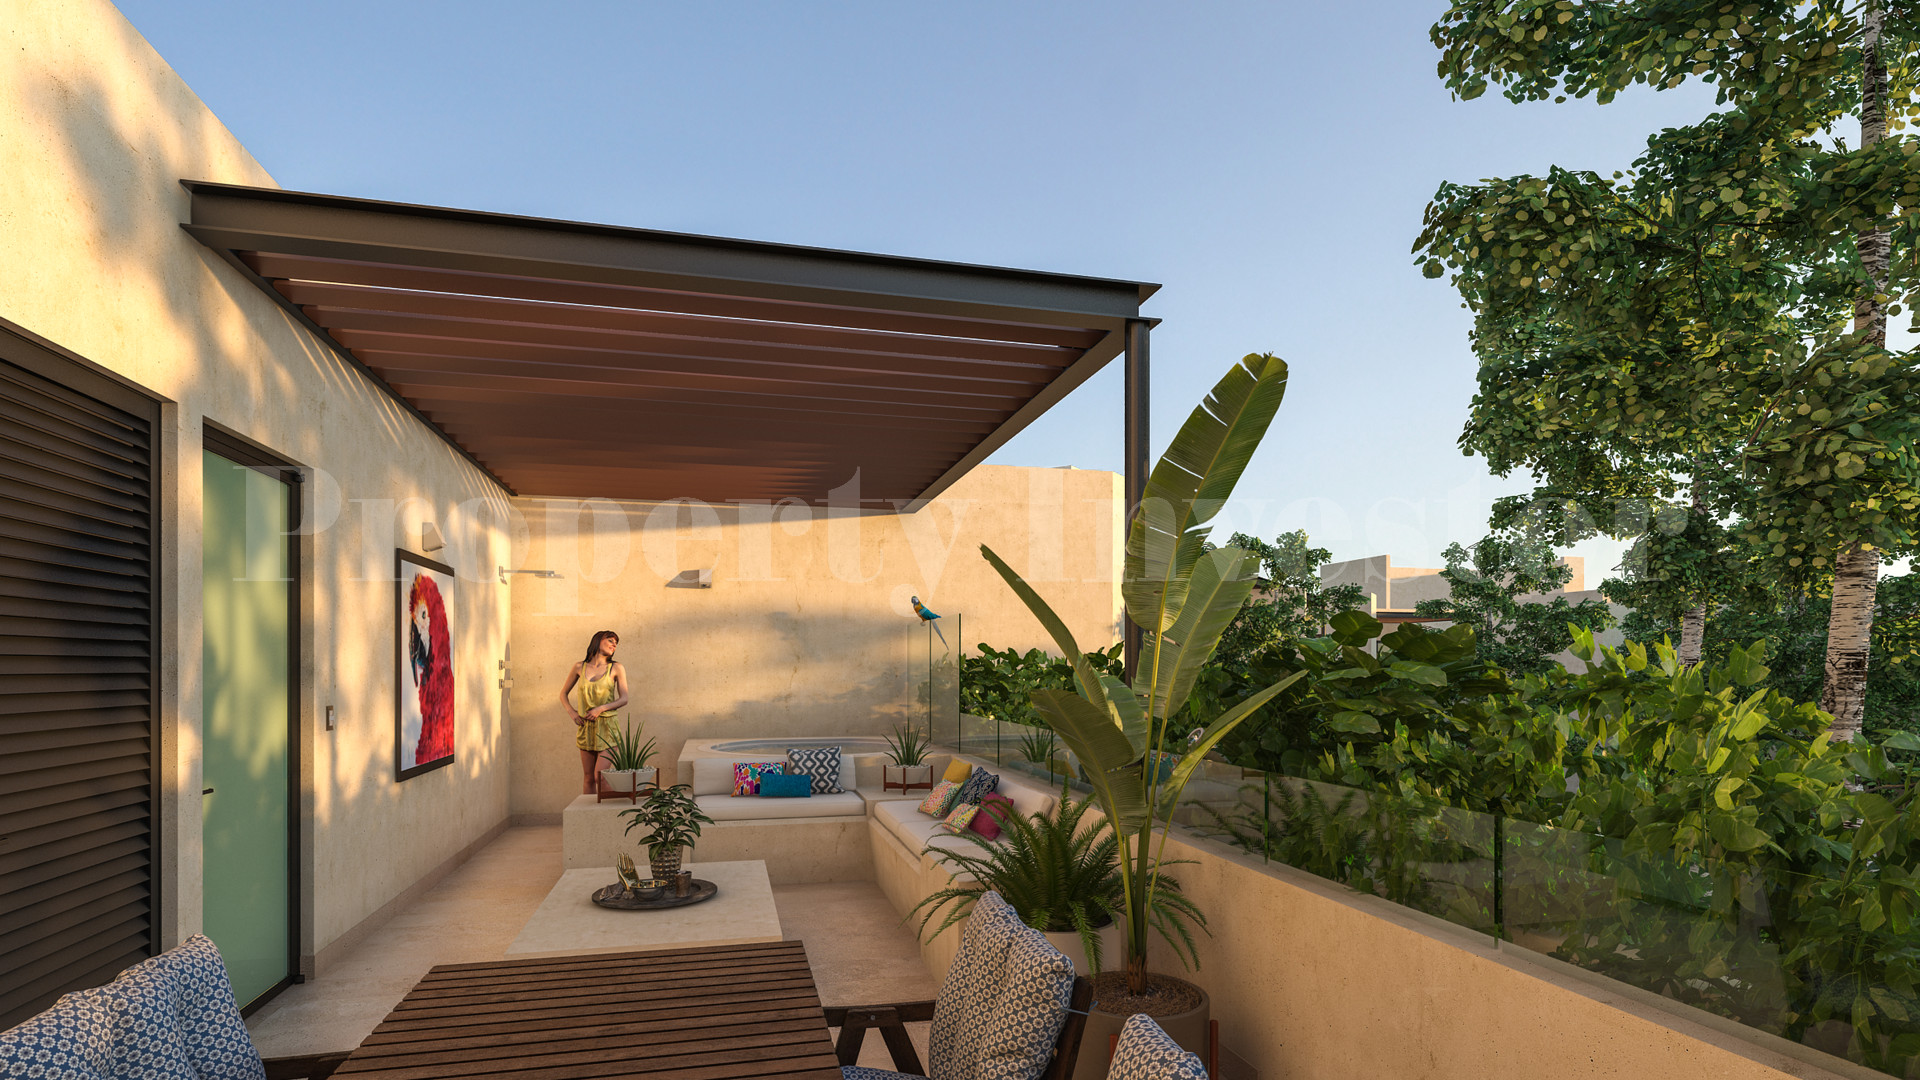 2 Bedroom Boutique Apartment with Garden in Tulum (B-003)